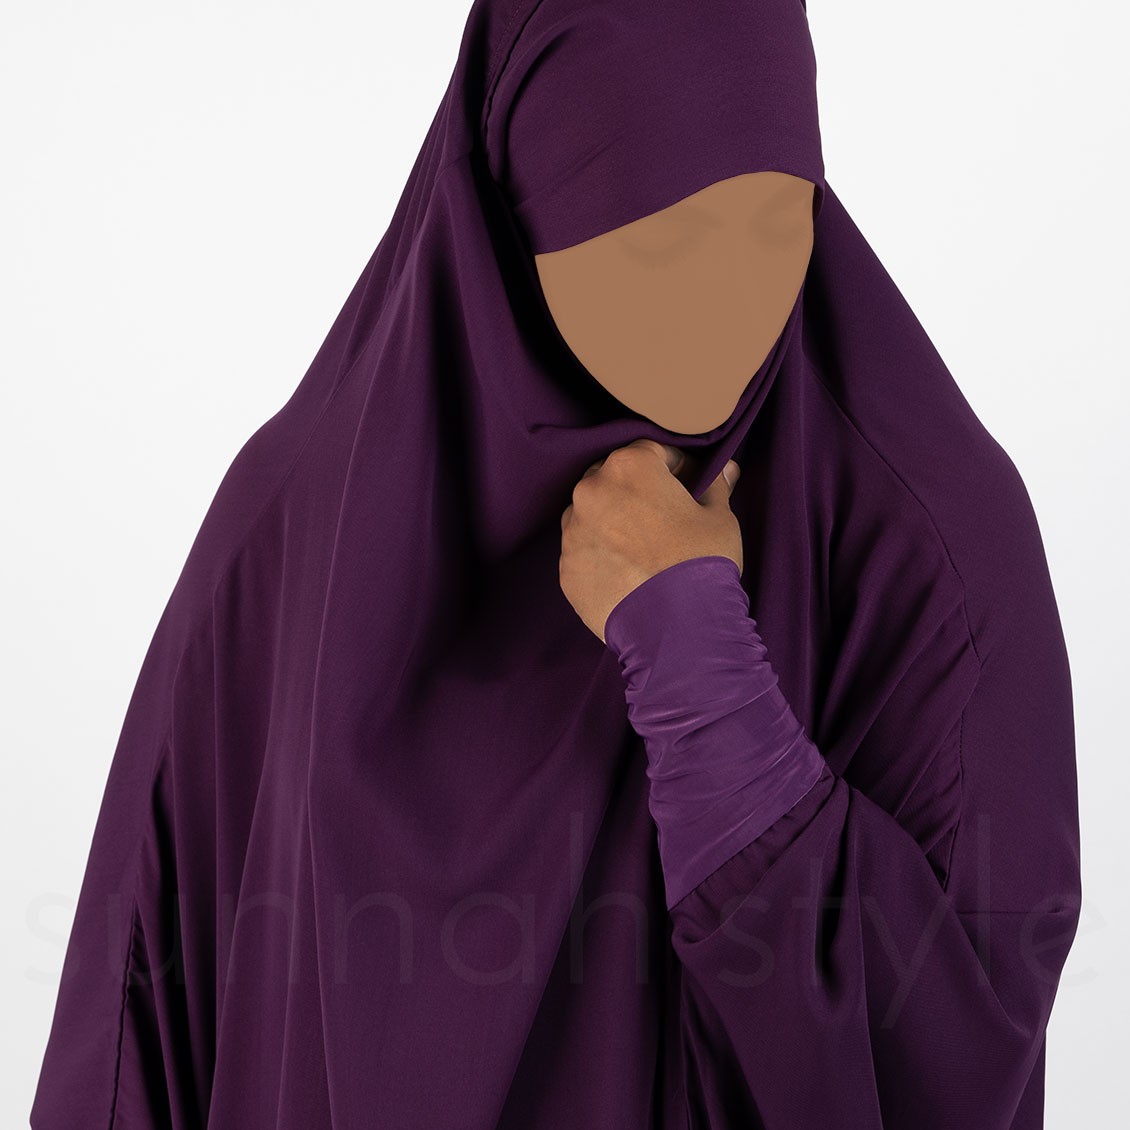 Sunnah Style Plain Full Length Jilbab Grape